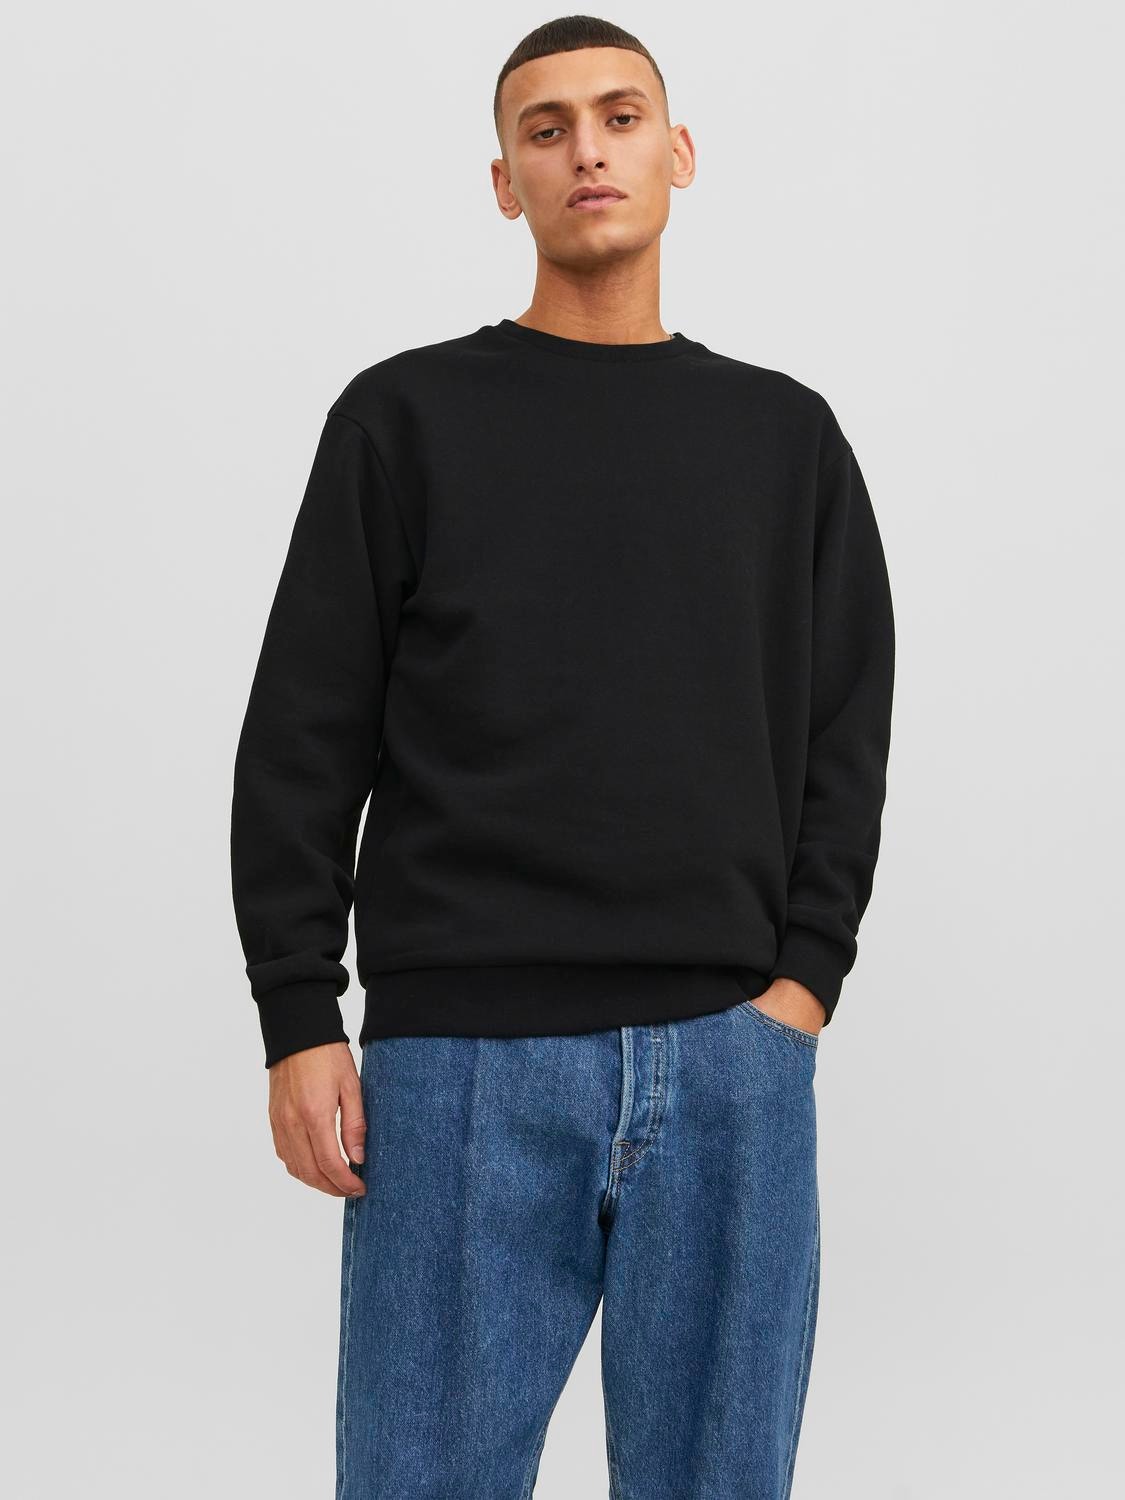 Jack & Jones Plain Sweatshirt -Black - 12249341